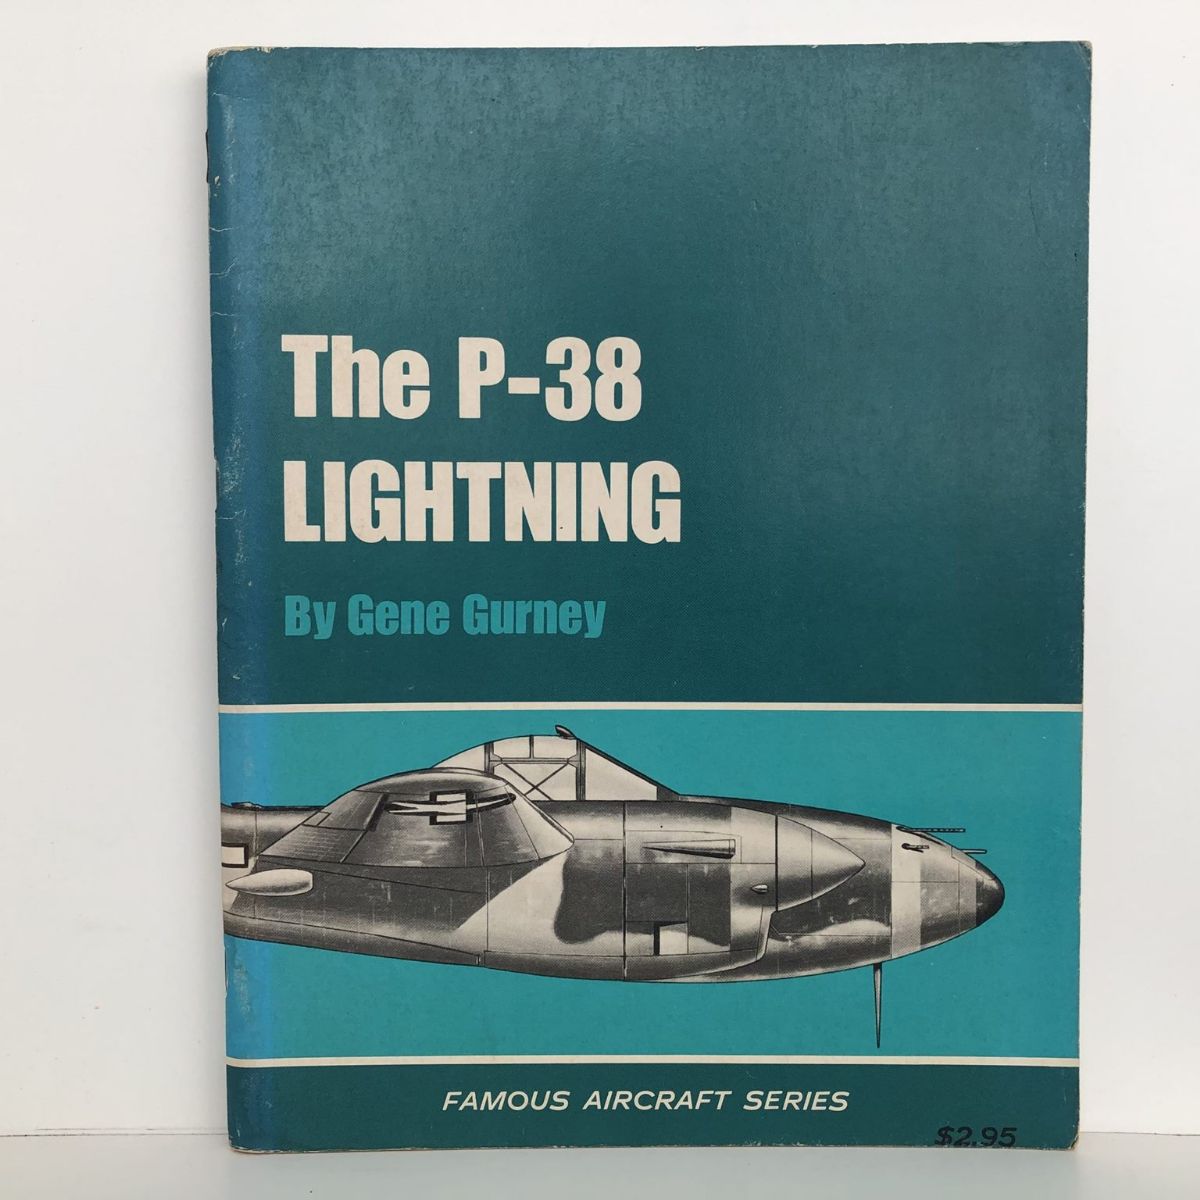 THE P-38 LIGHTNING